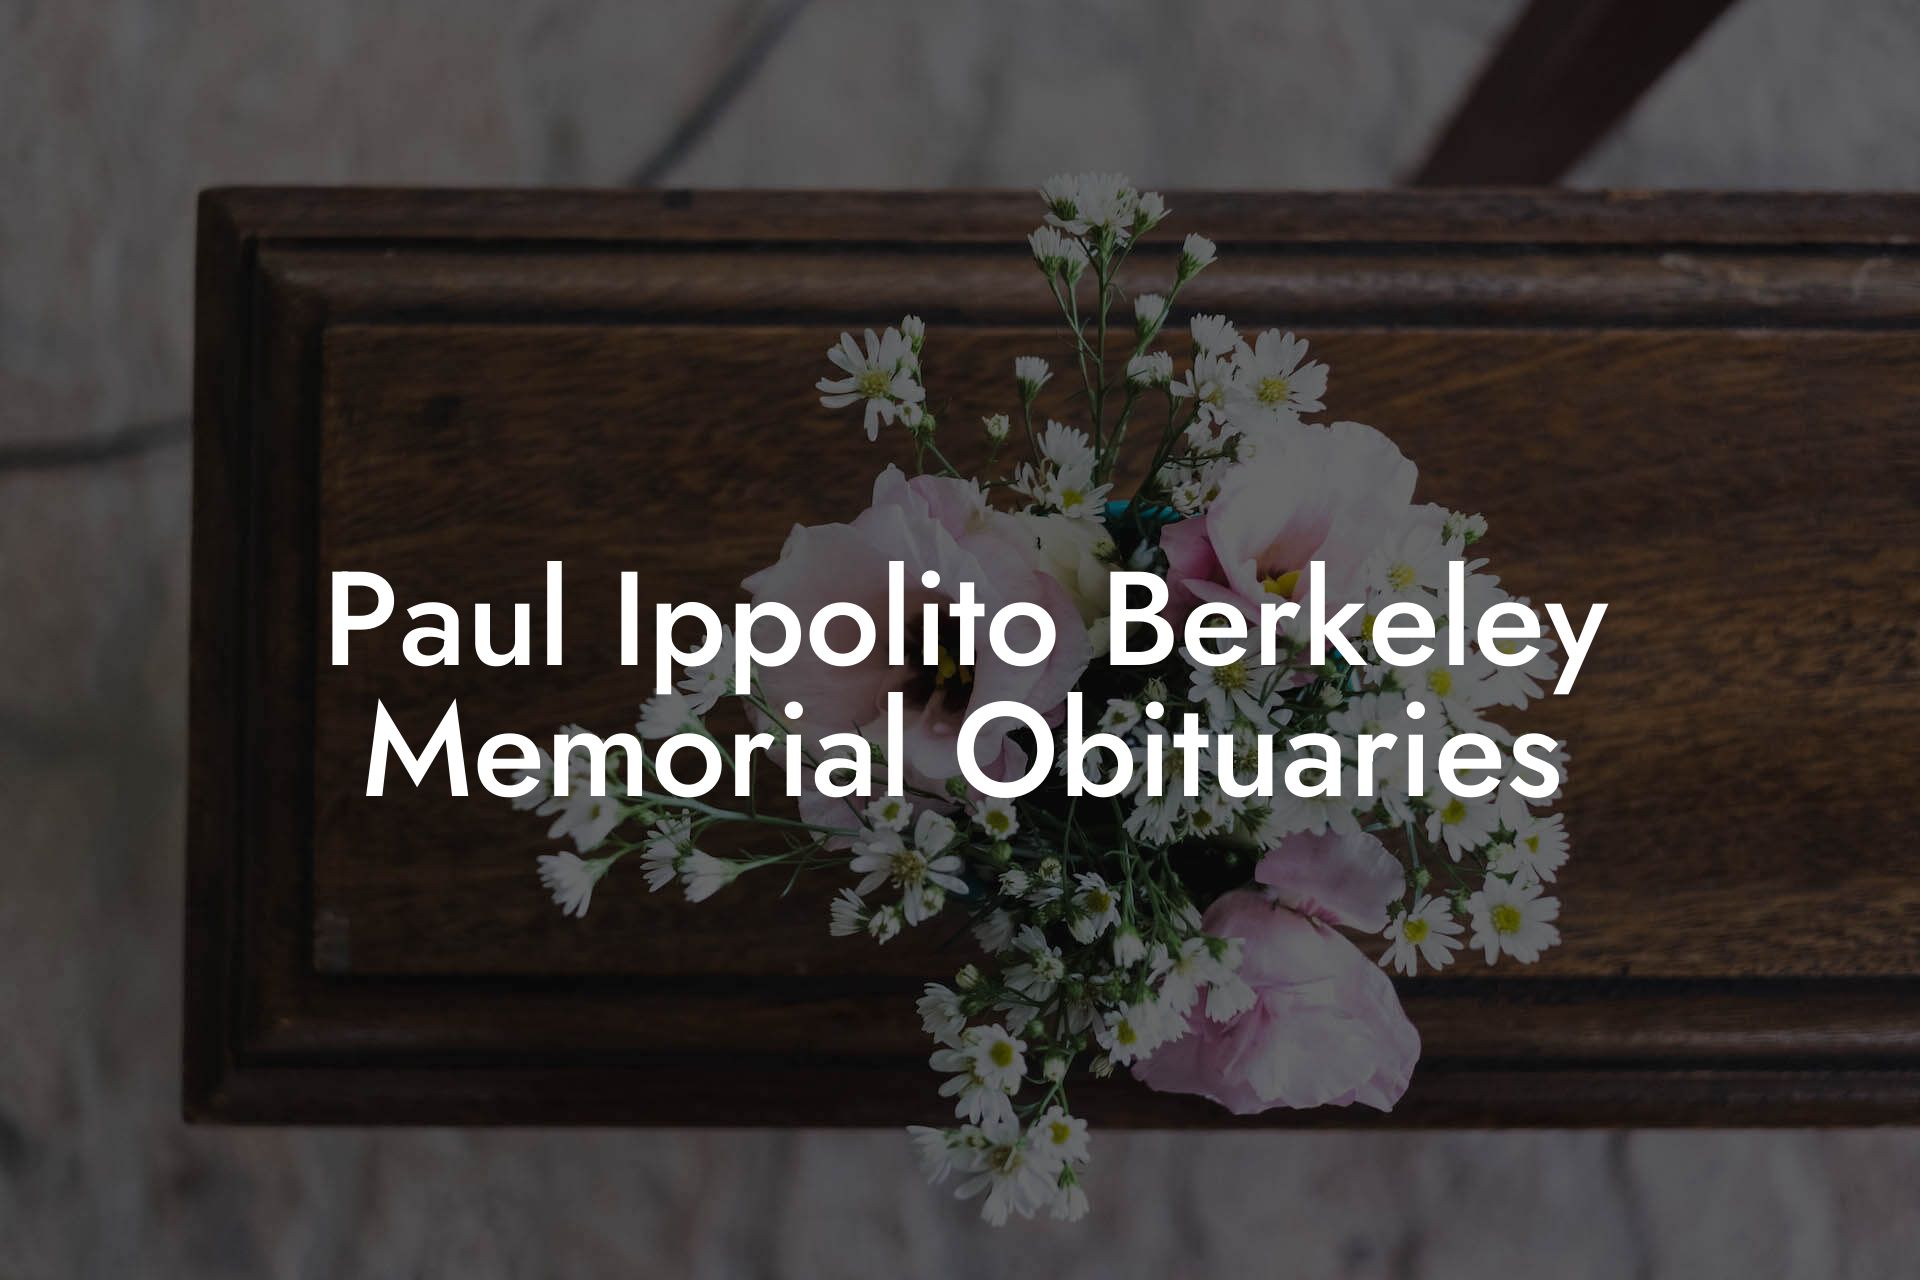 Paul Ippolito Berkeley Memorial Obituaries